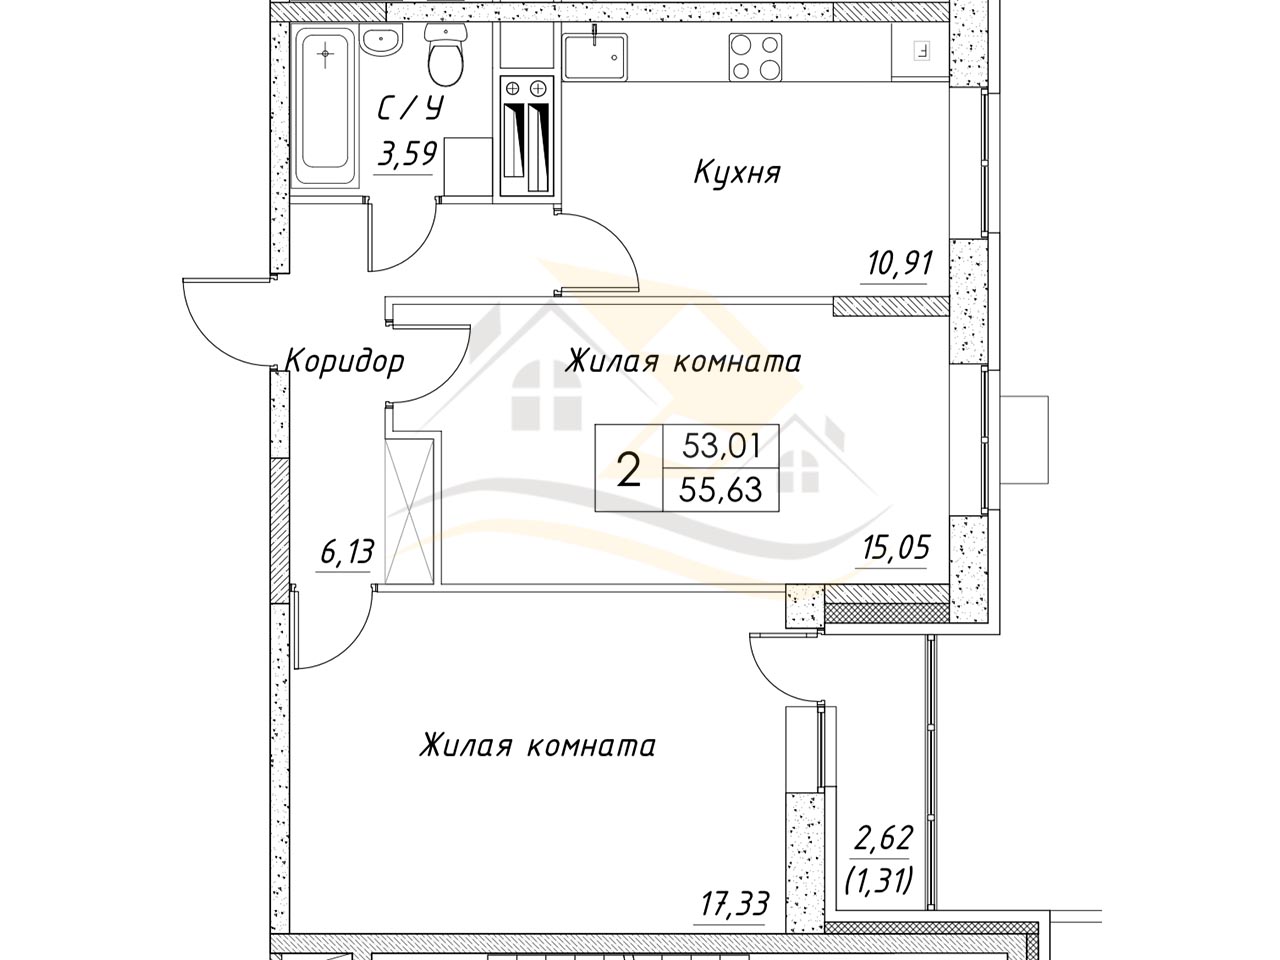 2-х комнатная квартира 55.6 кв. м. в строящемся 14-ти этажном доме ЖК «Шоколад». КварталСити